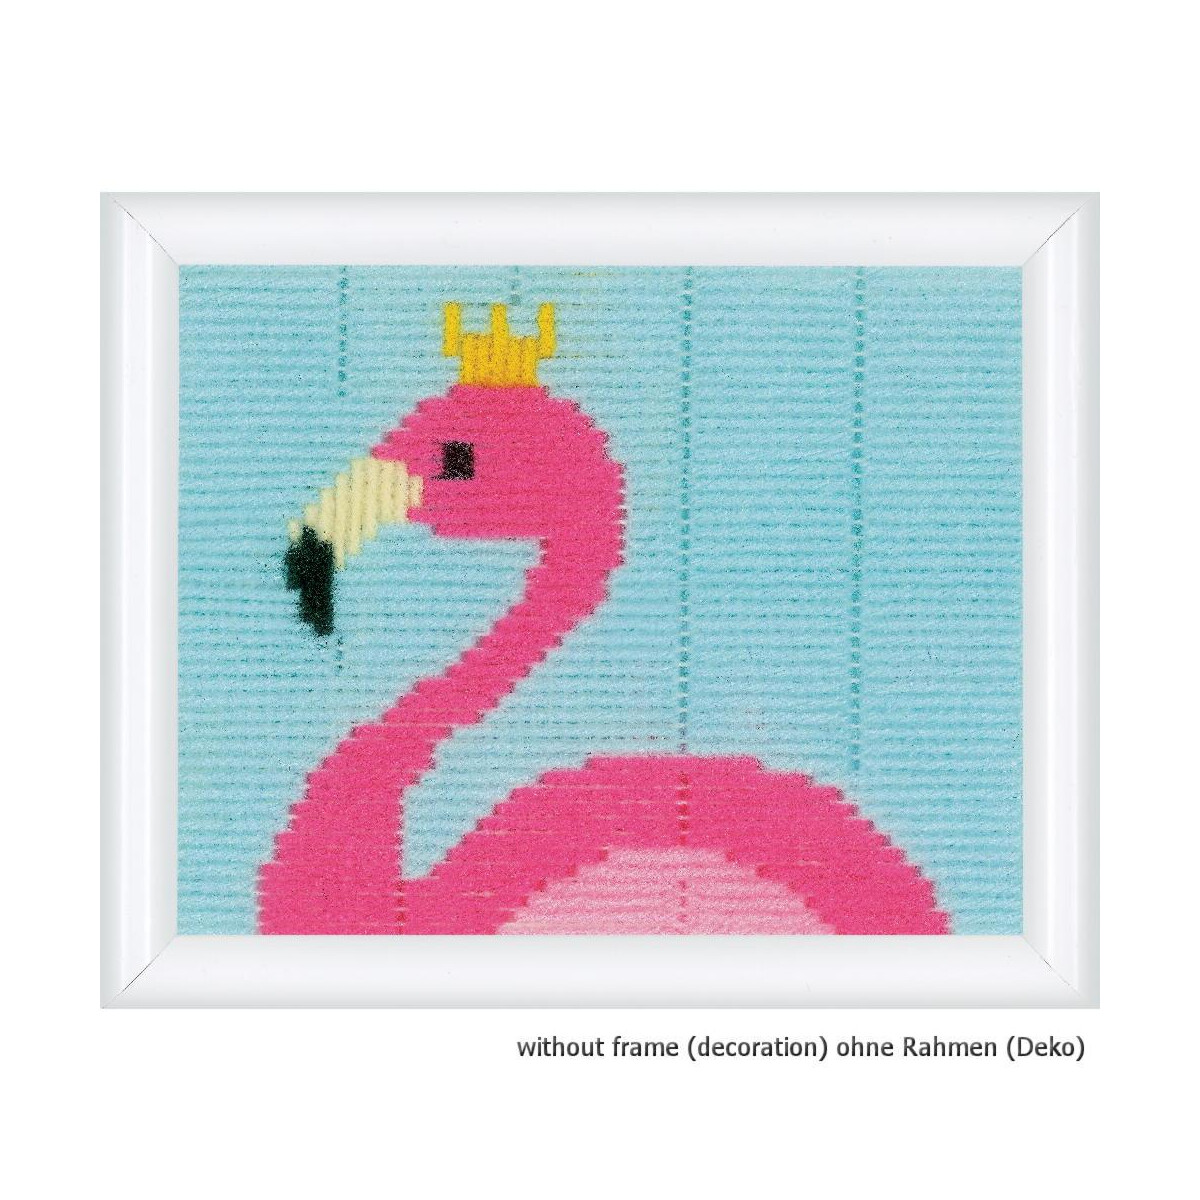 Vervaco stamped long stitch kit Flamingo, DIY